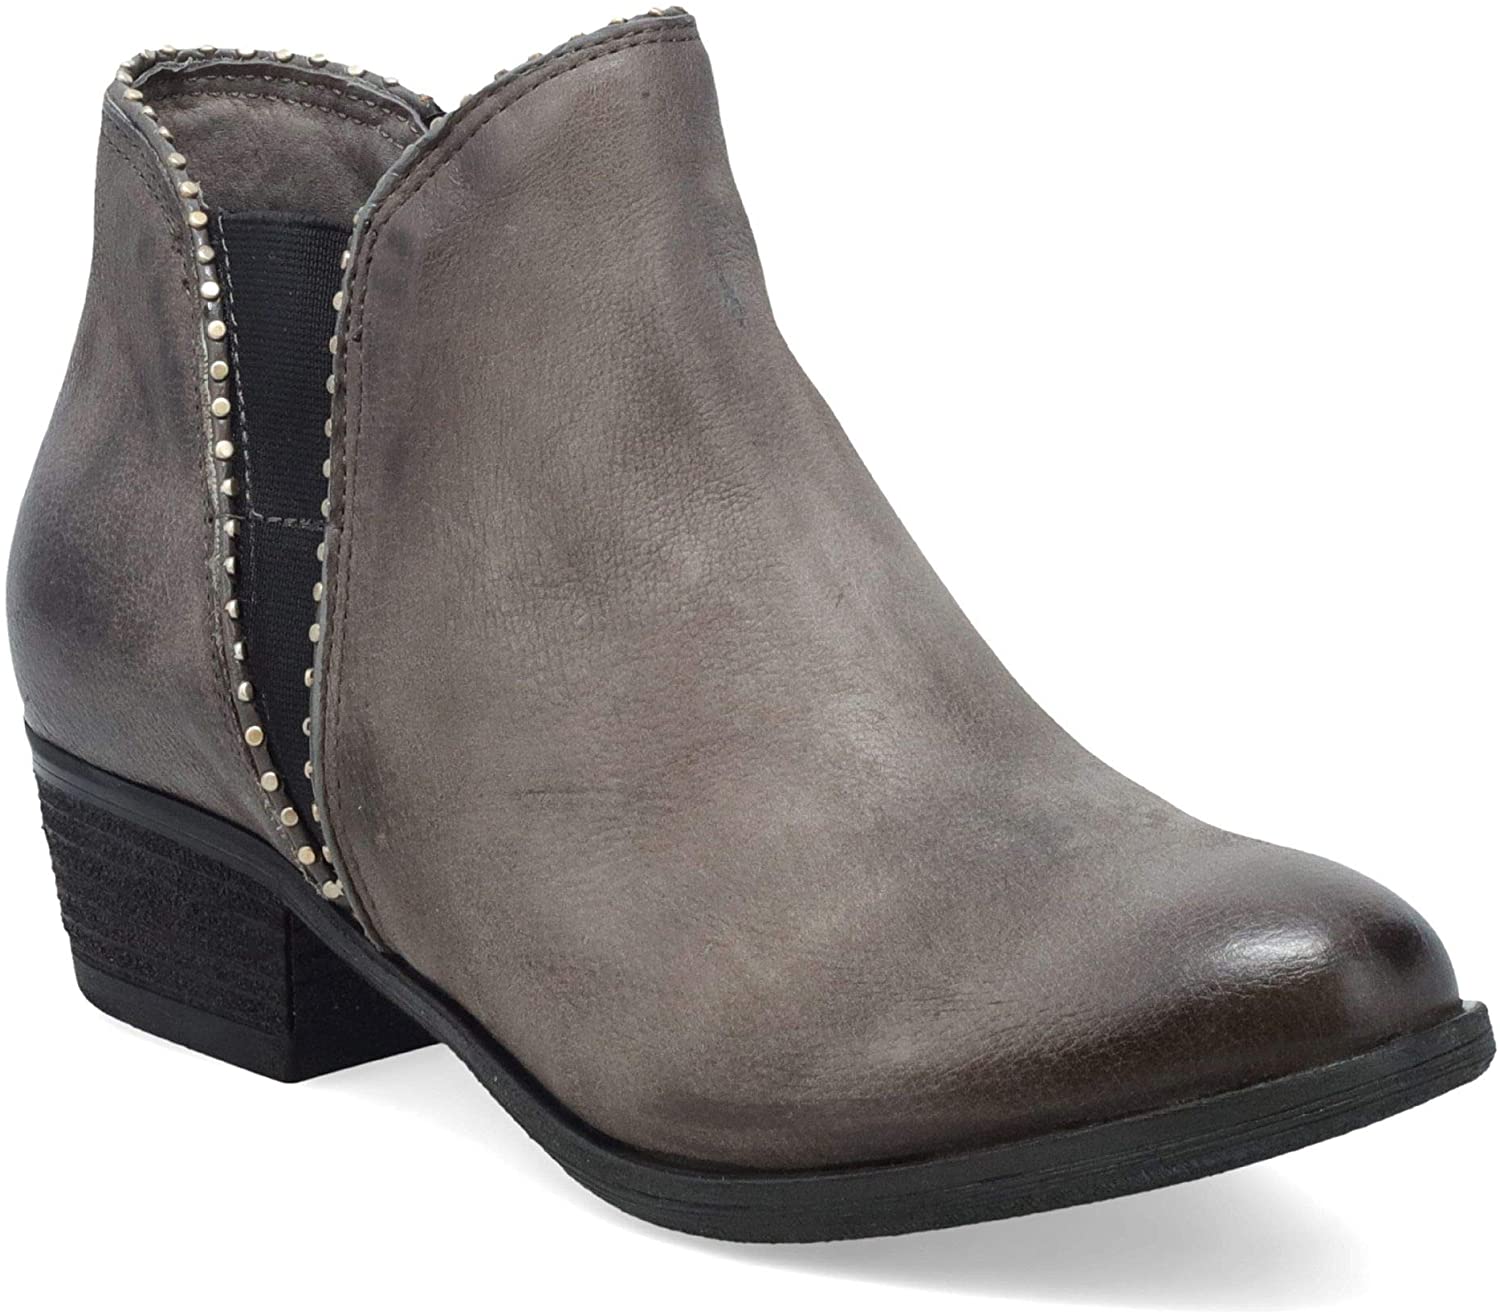 Miz Mooz Barrett Women's Ankle Boot, Grey, Size 8.5 0XT3 | eBay